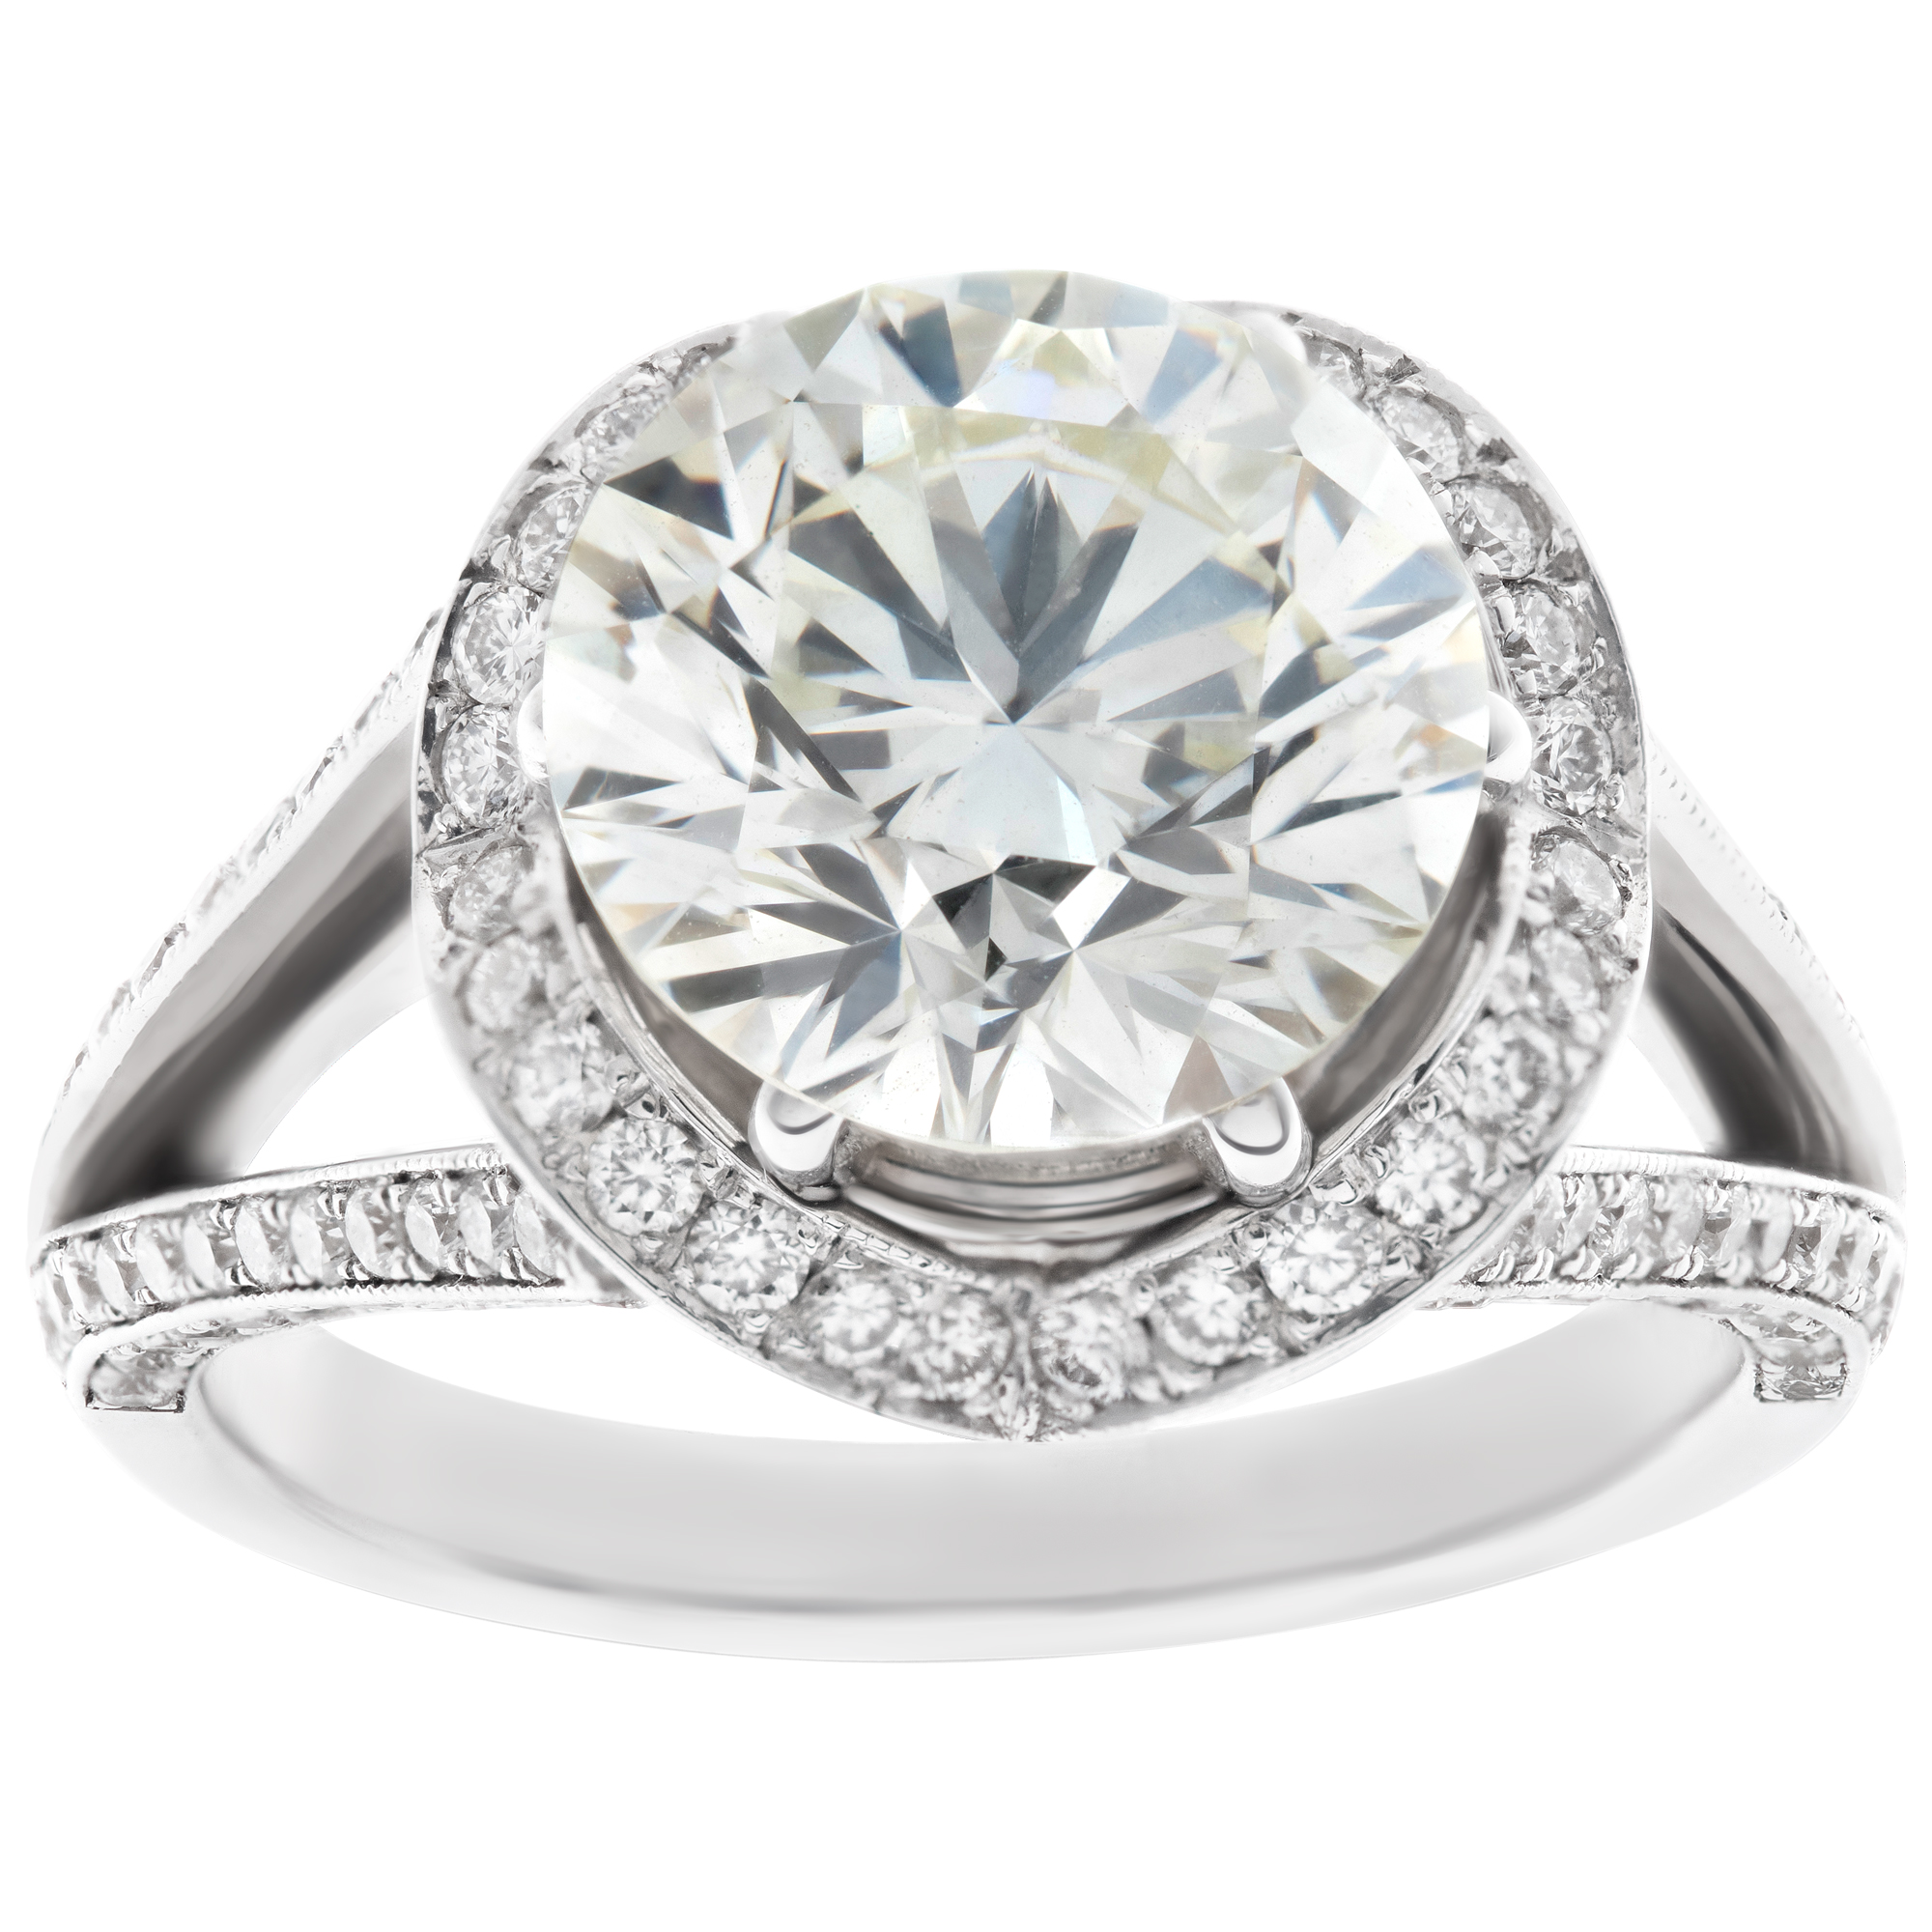 GIA certified round brilliant cut diamond 4.04 carat (M color, VS1 clarity) ring